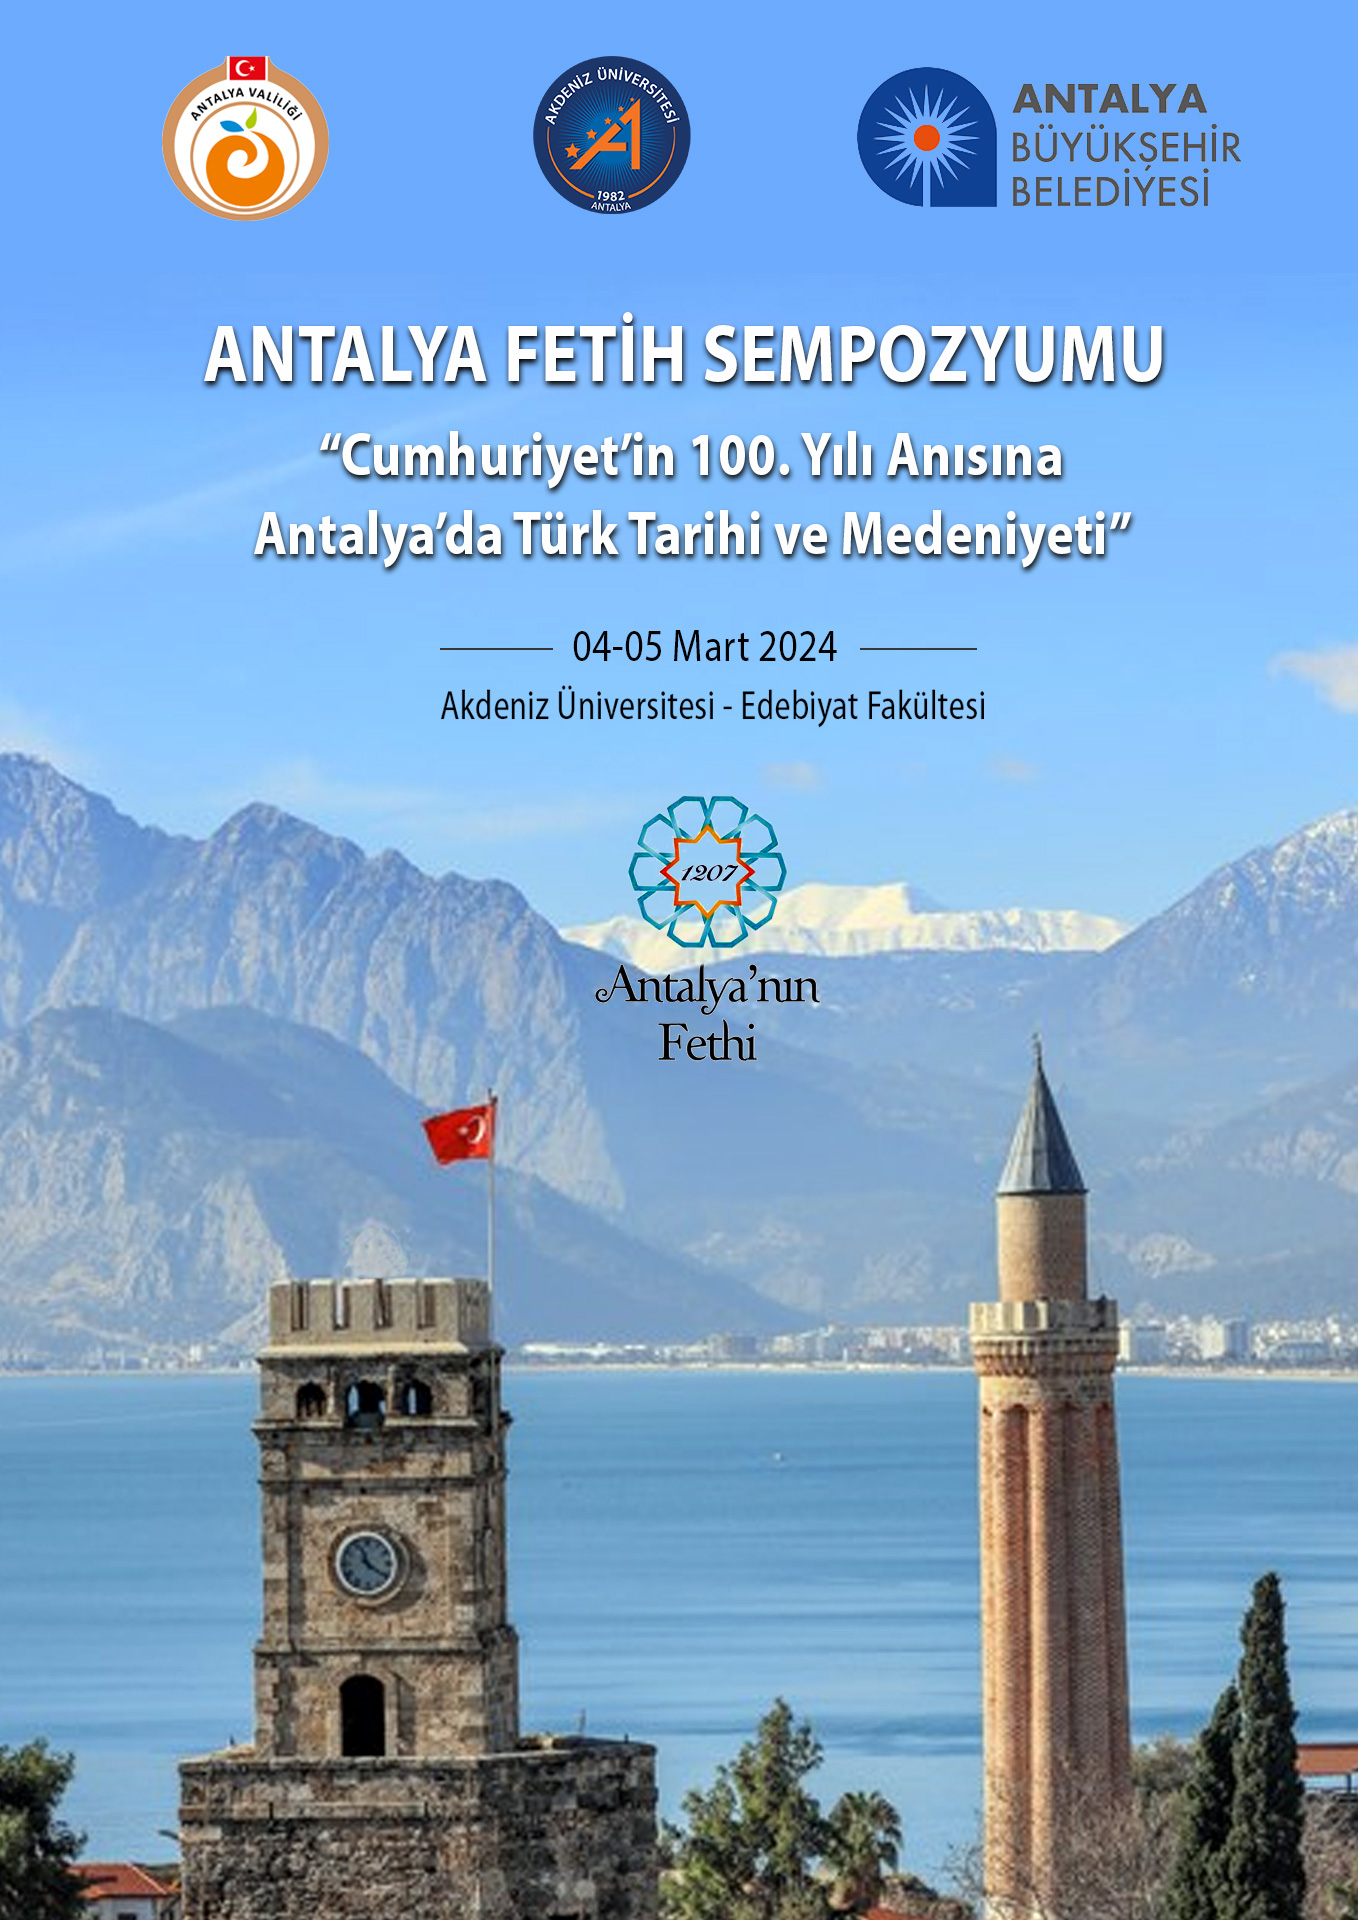 Antalya_Fetih_Afis2.jpg